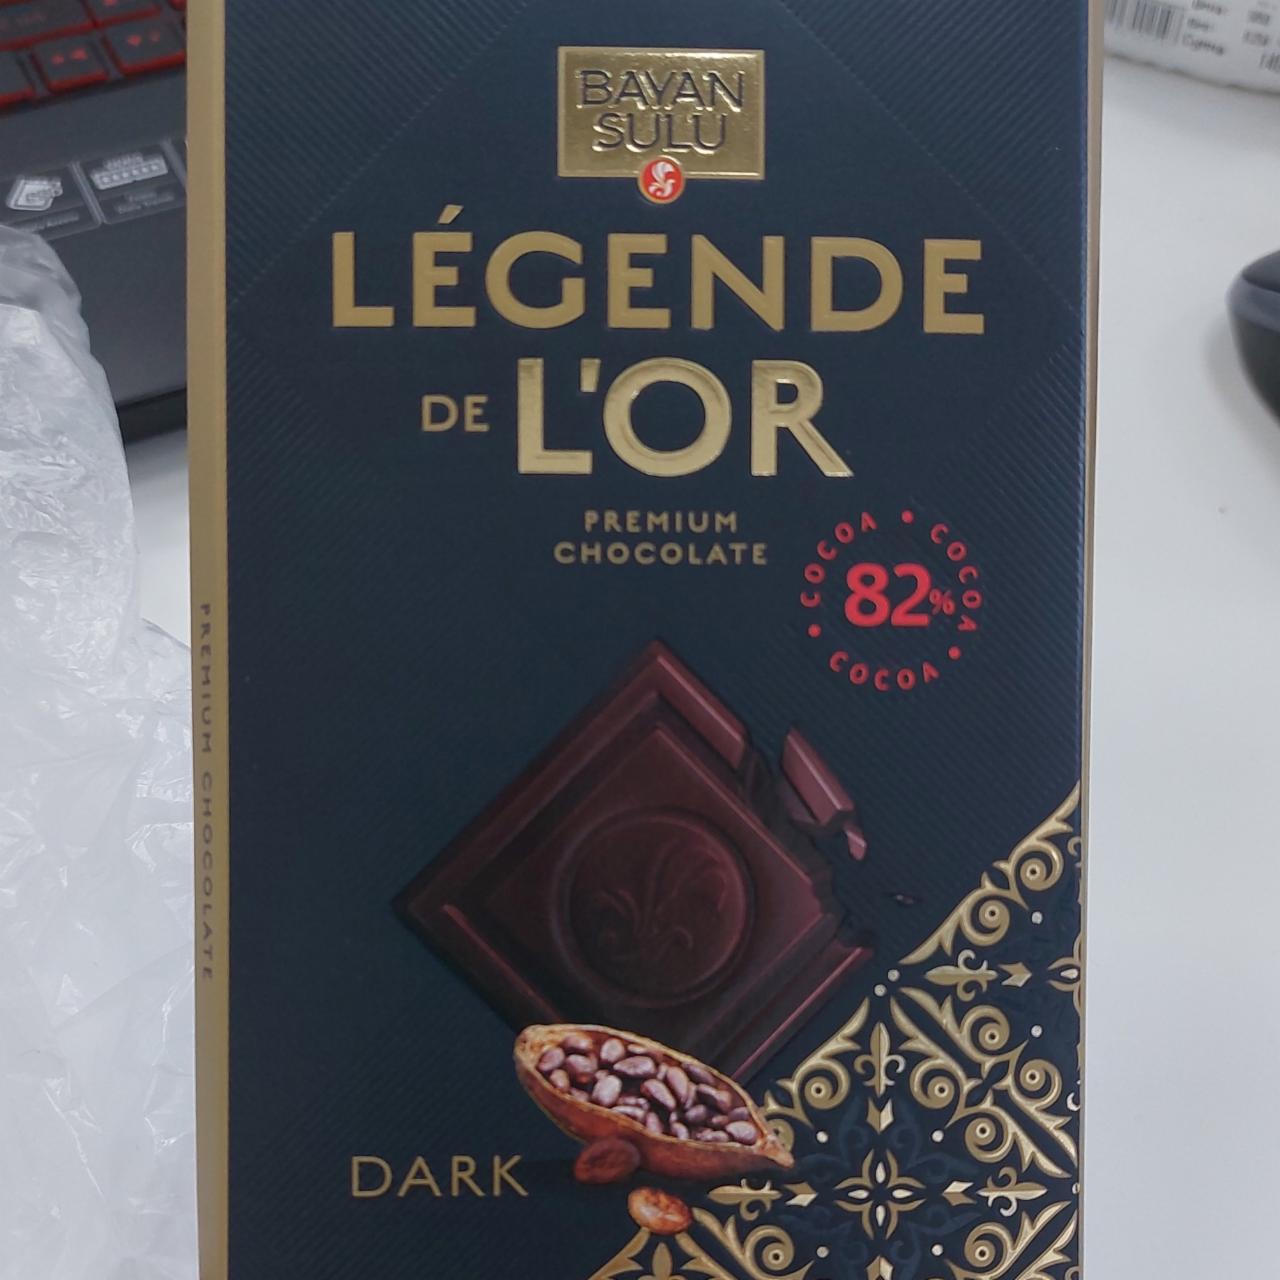 Фото - Шоколад Legende de l'or Dark Bayan Sulu